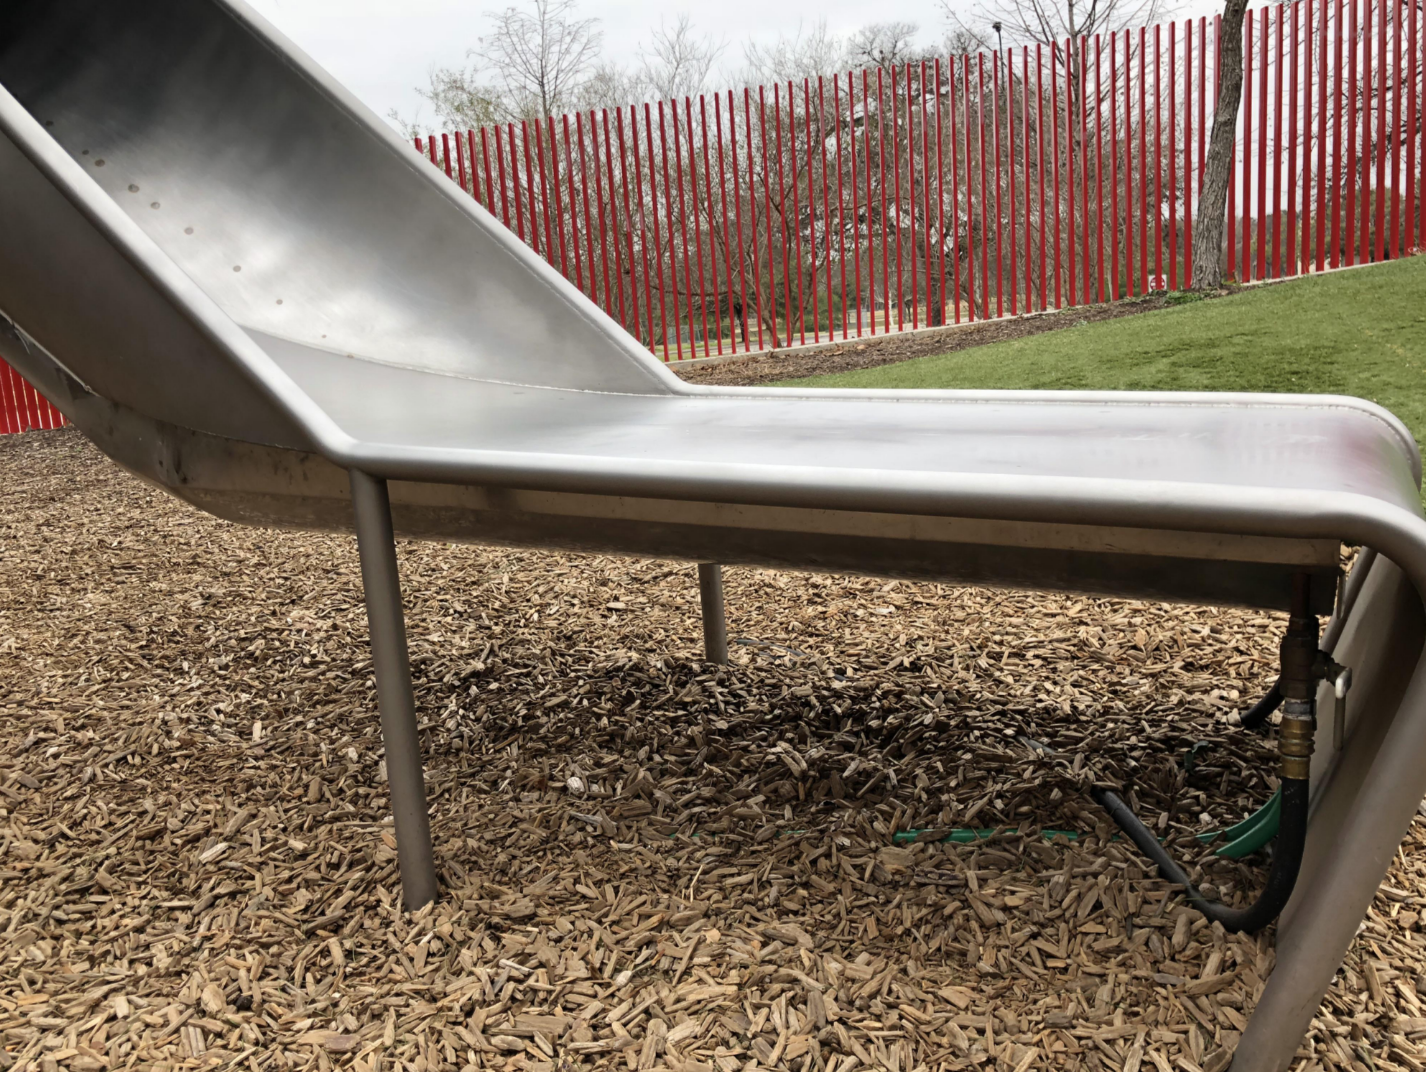 a playground slide